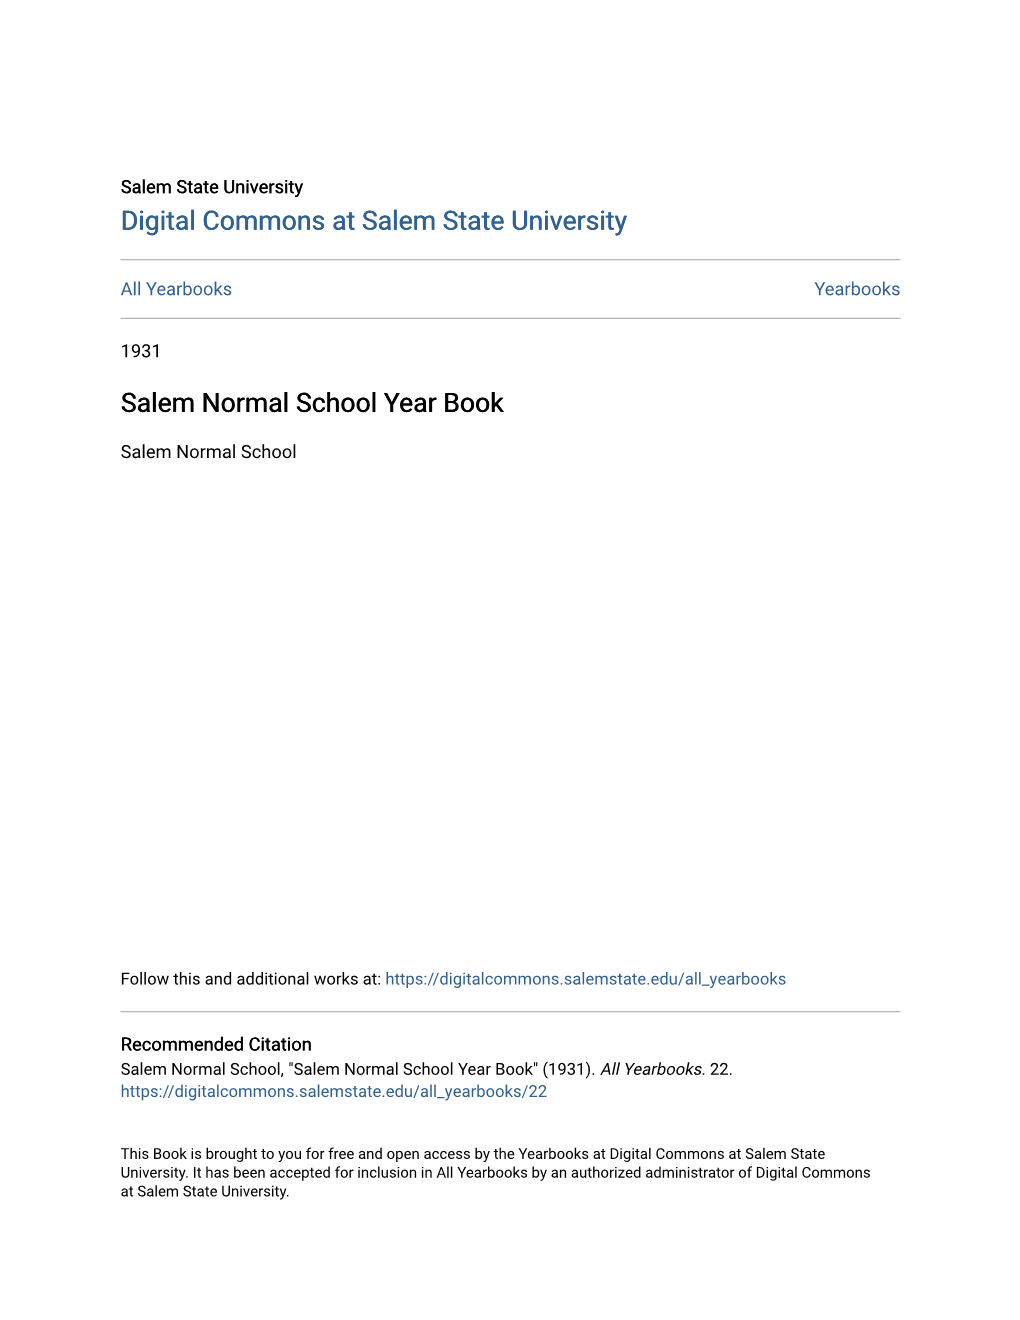 Salem Normal School Year Book